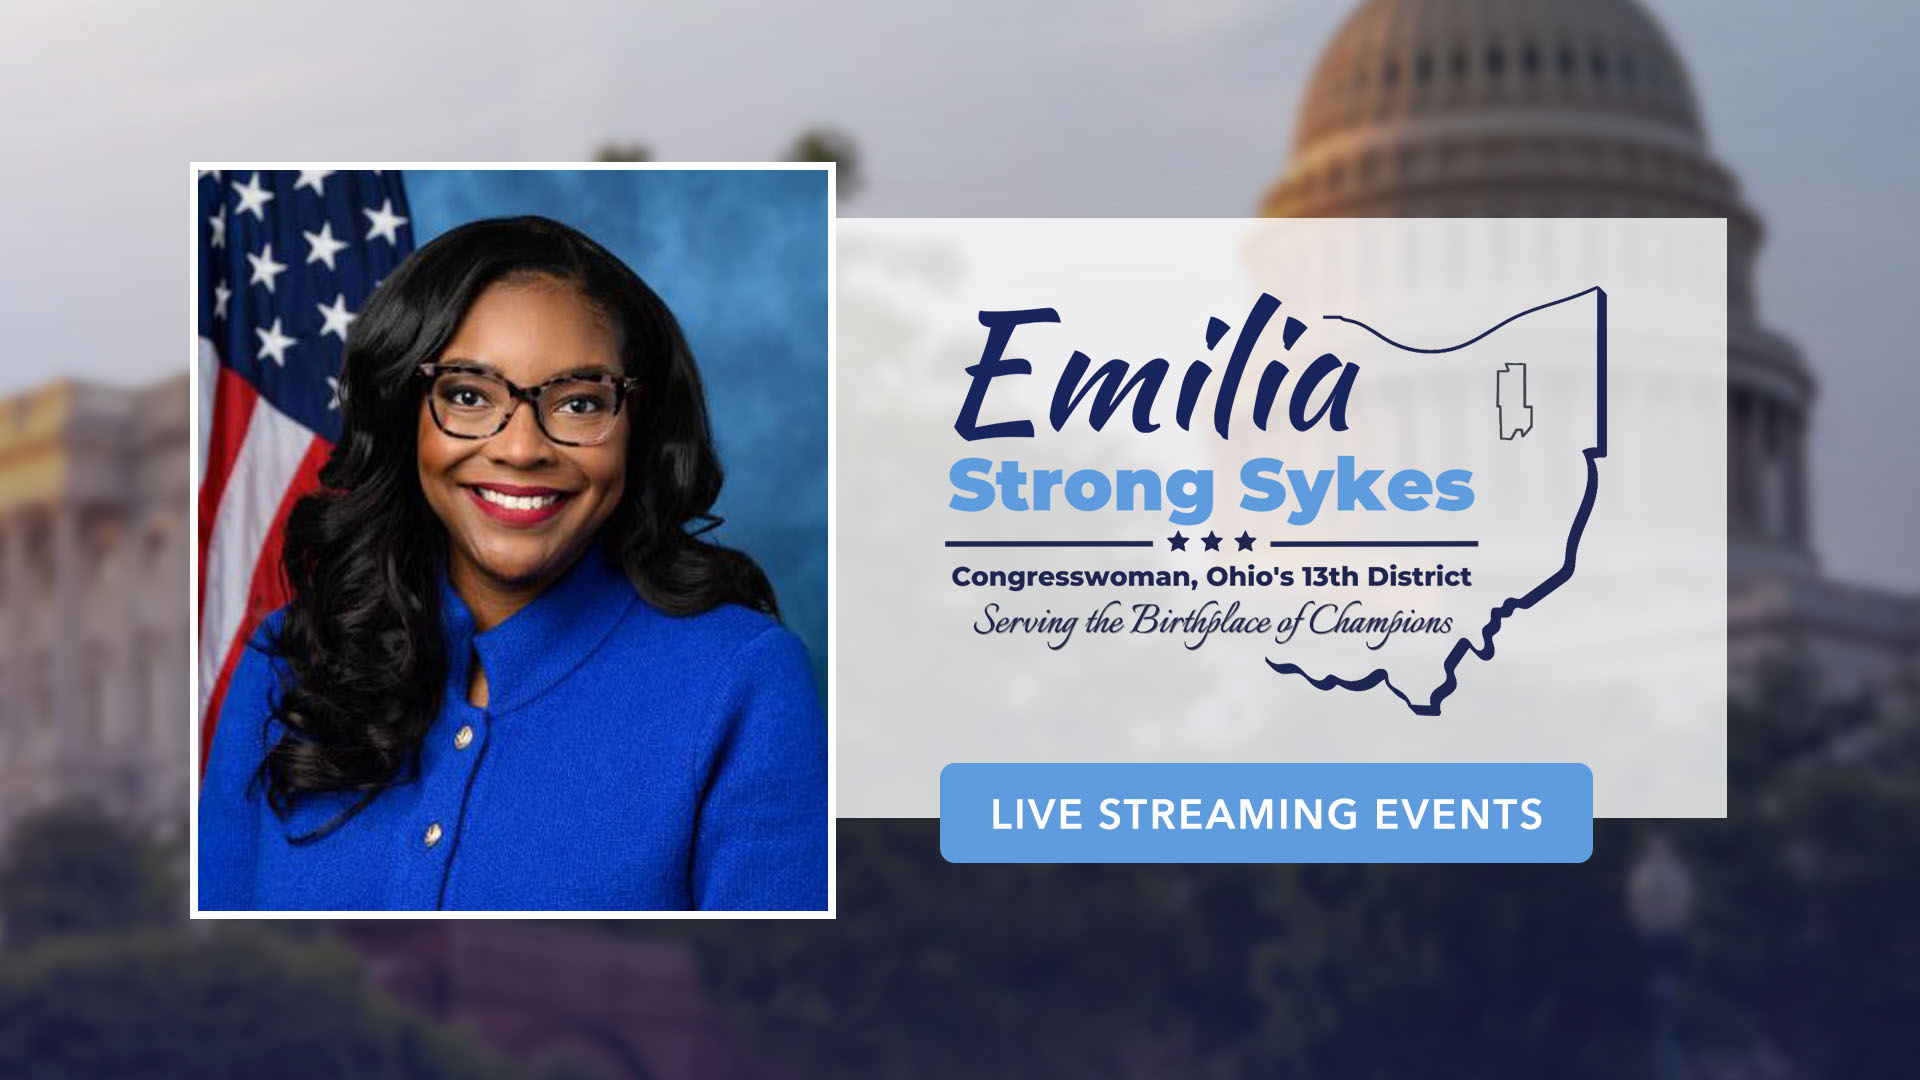 Congresswoman Emilia Sykes